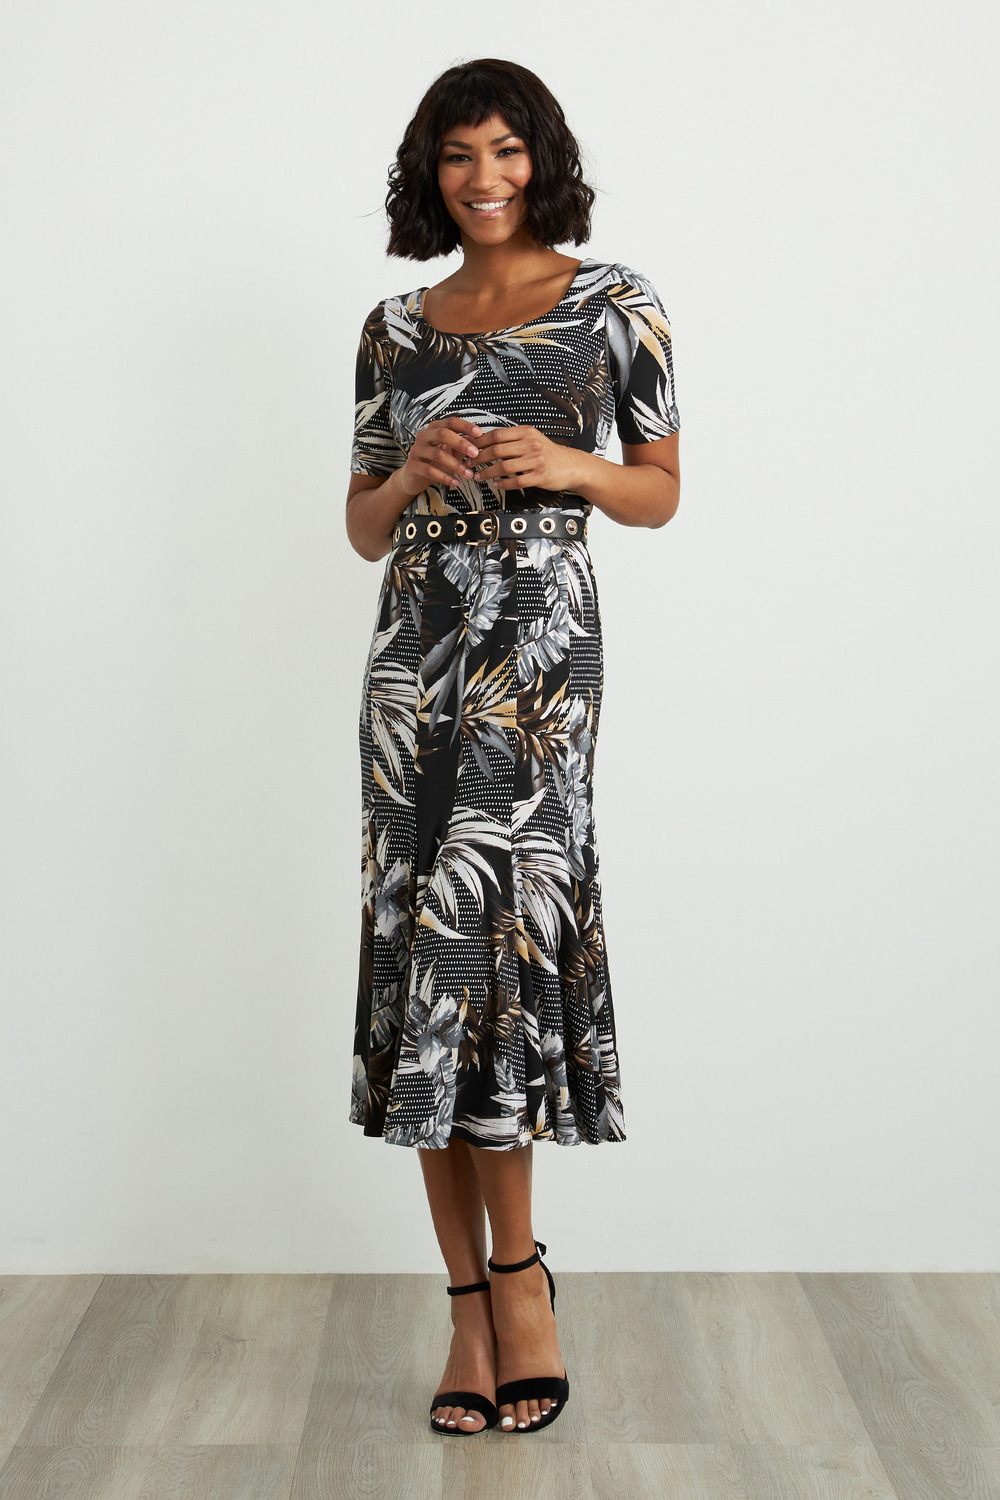 Joseph Ribkoff Tropical Print Short Sleeve Dress Style 211186. Black/multi